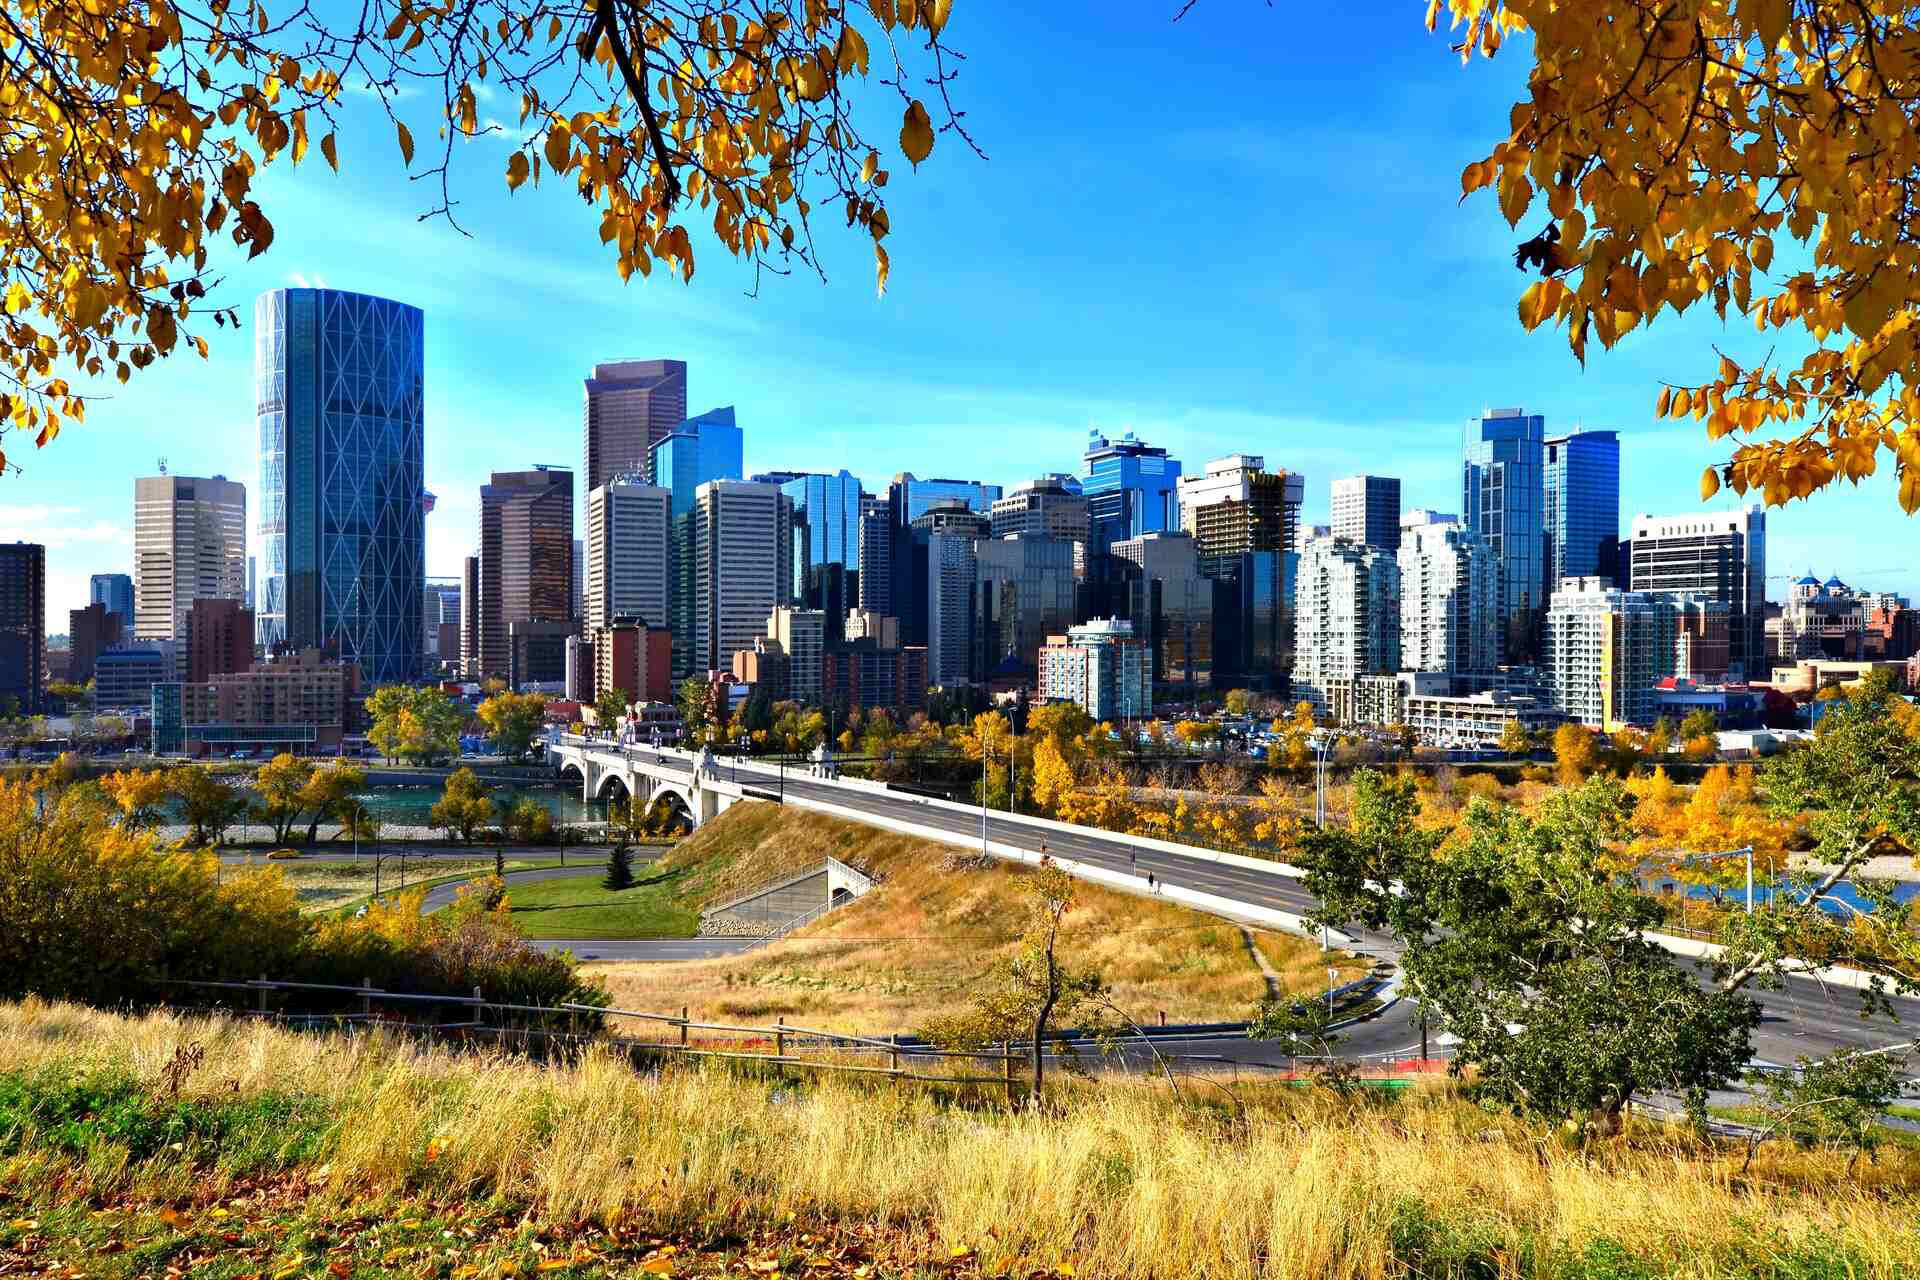 city of Calgary, Alberta during autumn